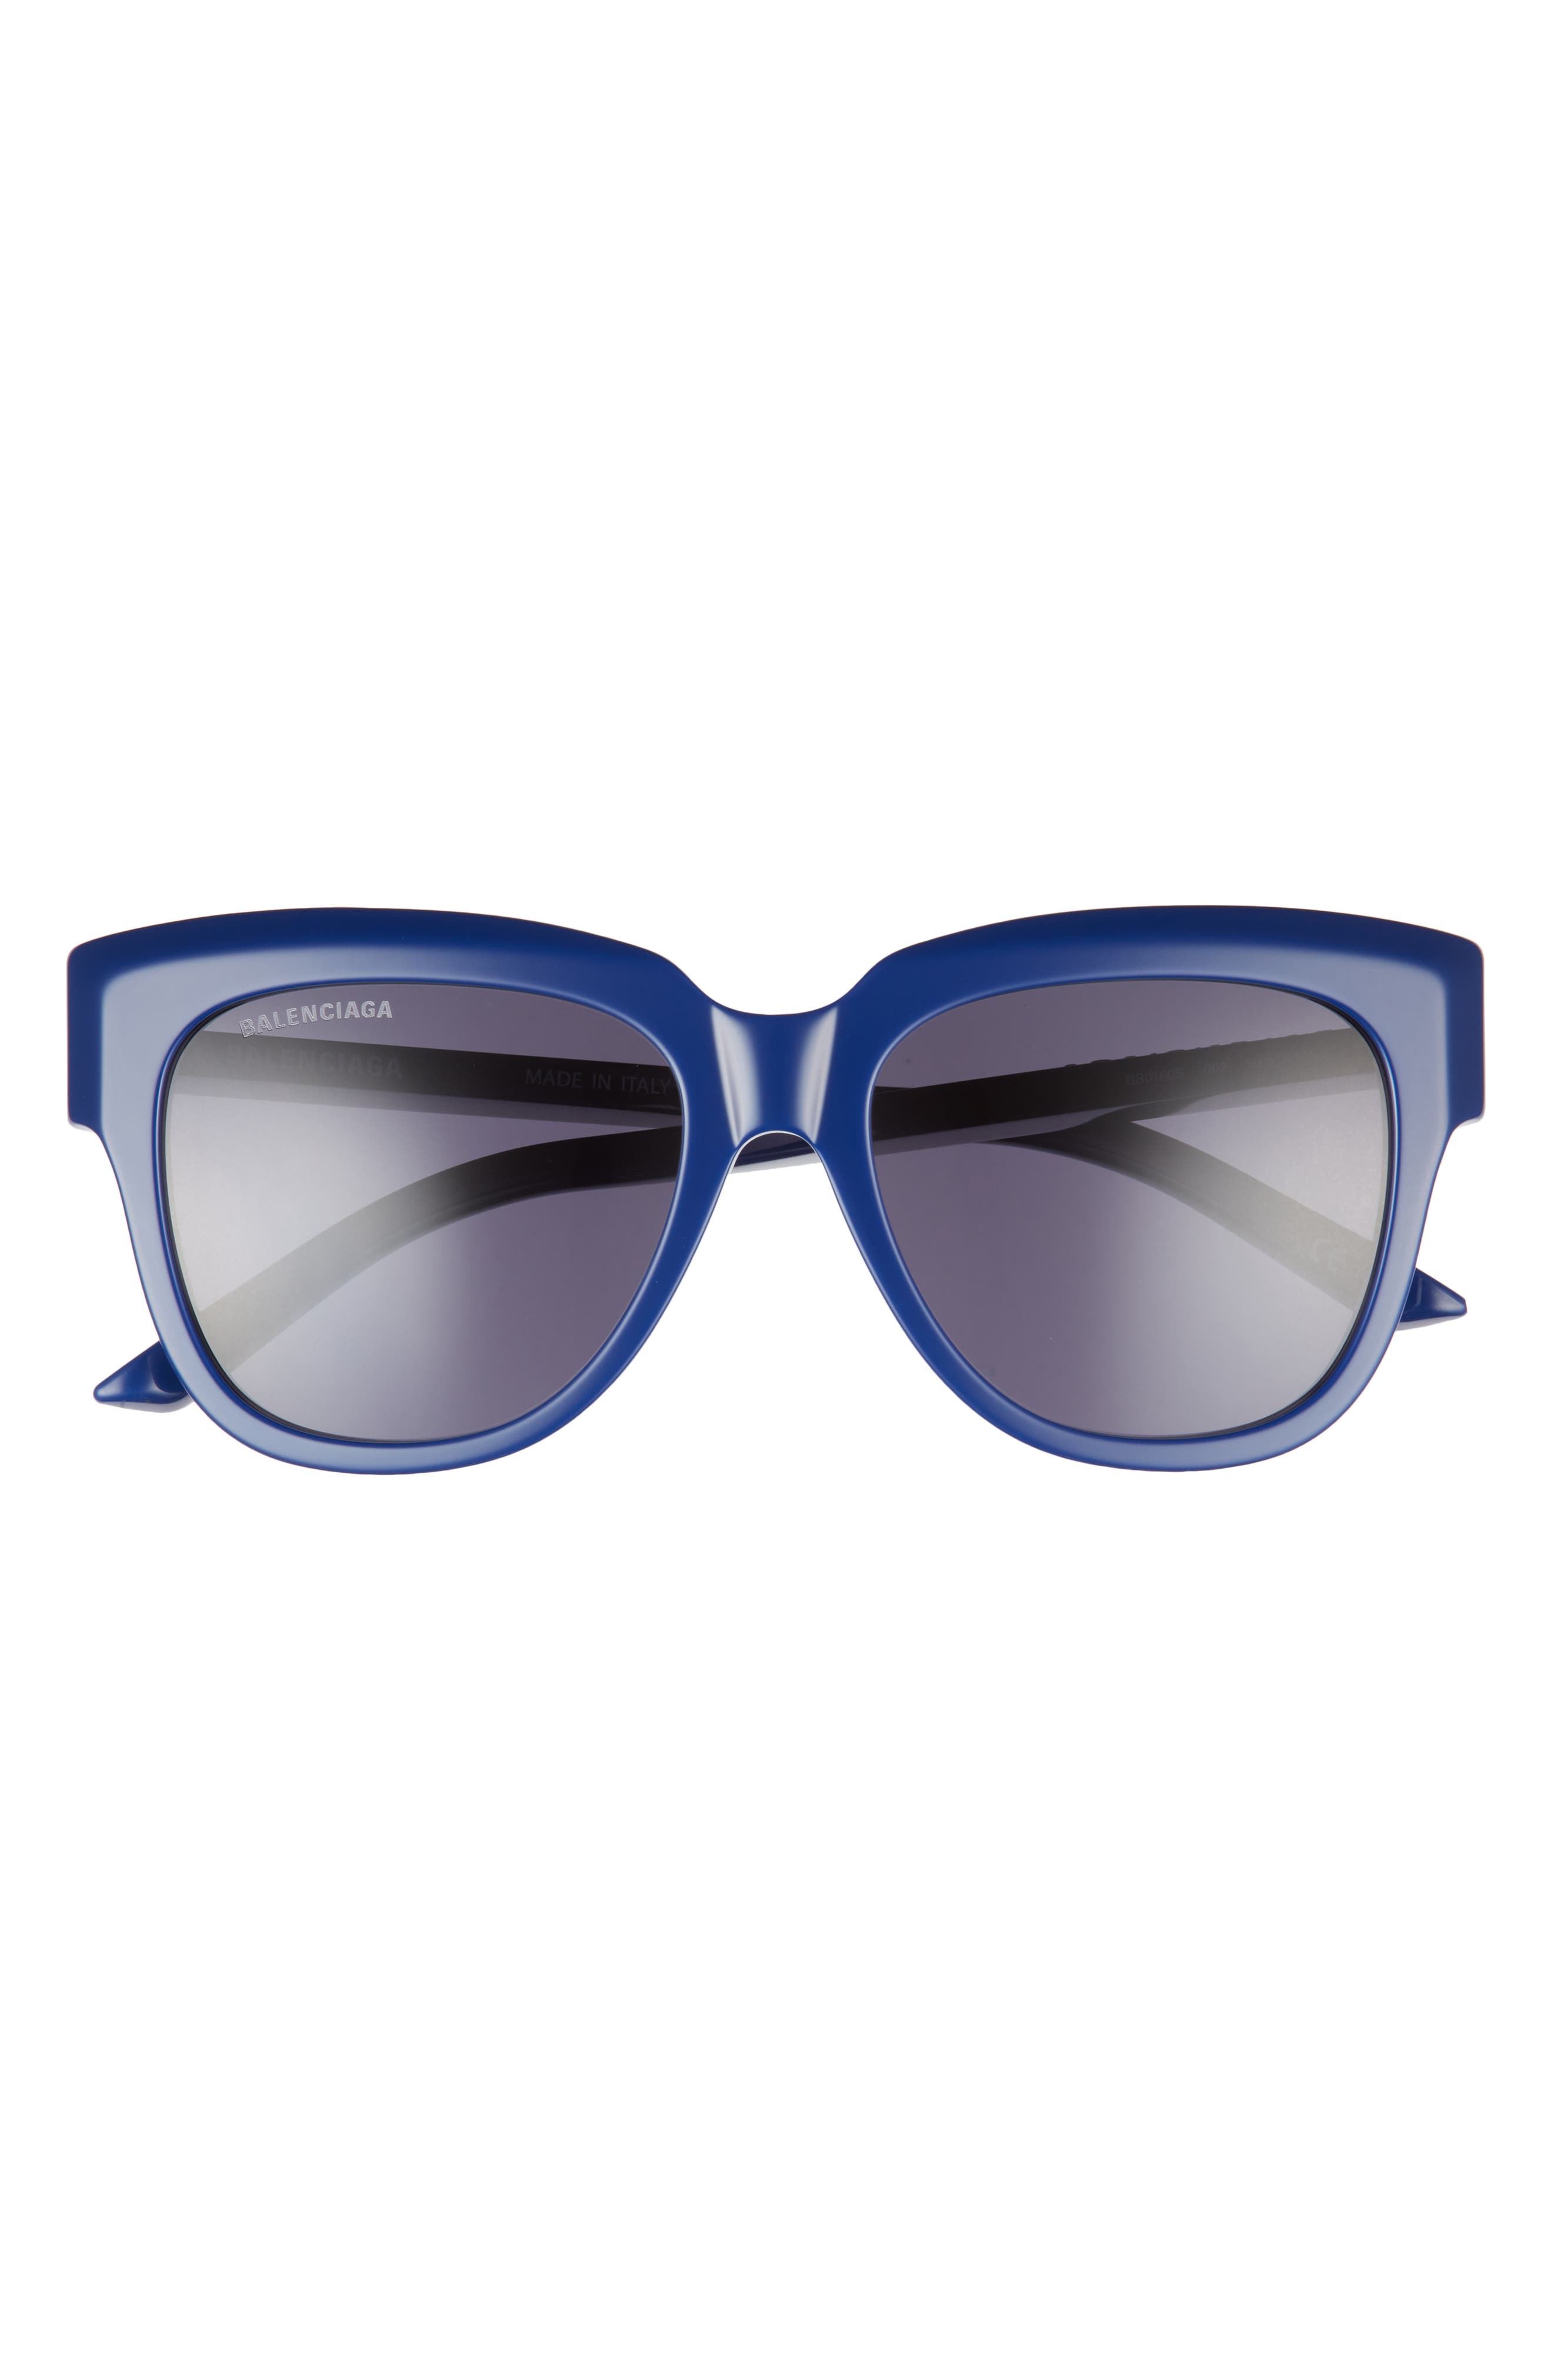 Balenciaga 53mm Rectangular Sunglasses in Blue at Nordstrom